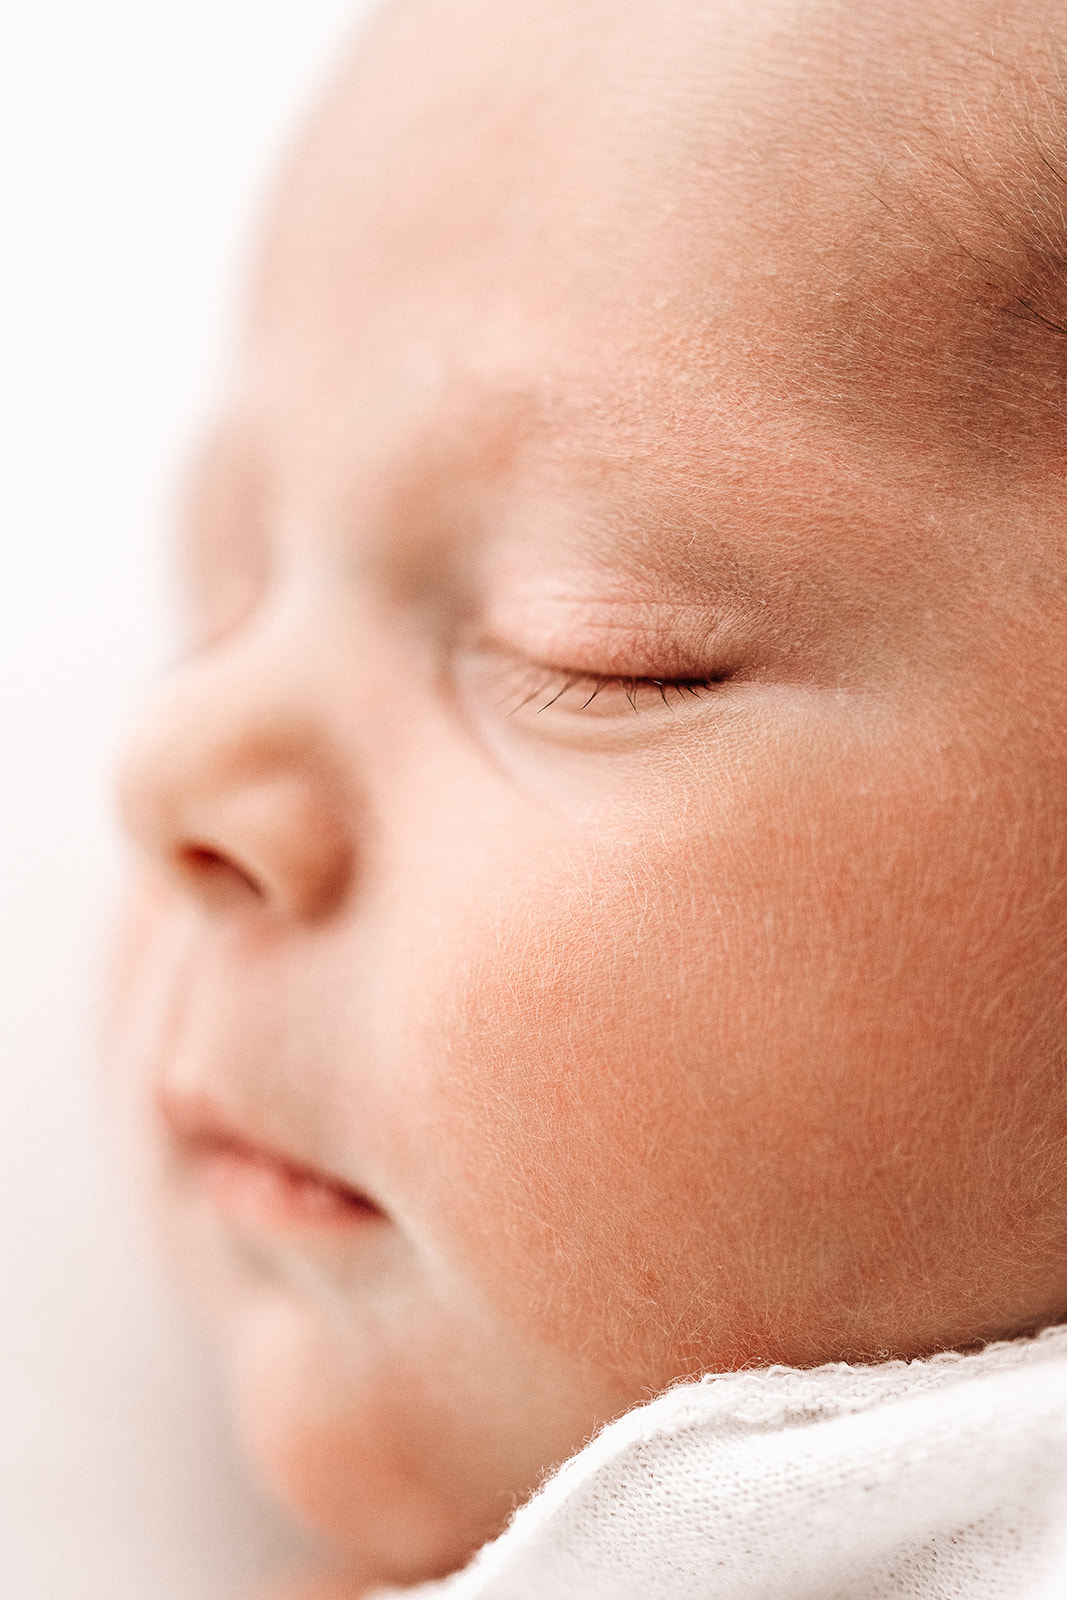 Details of a sleeping newborn baby's cheek